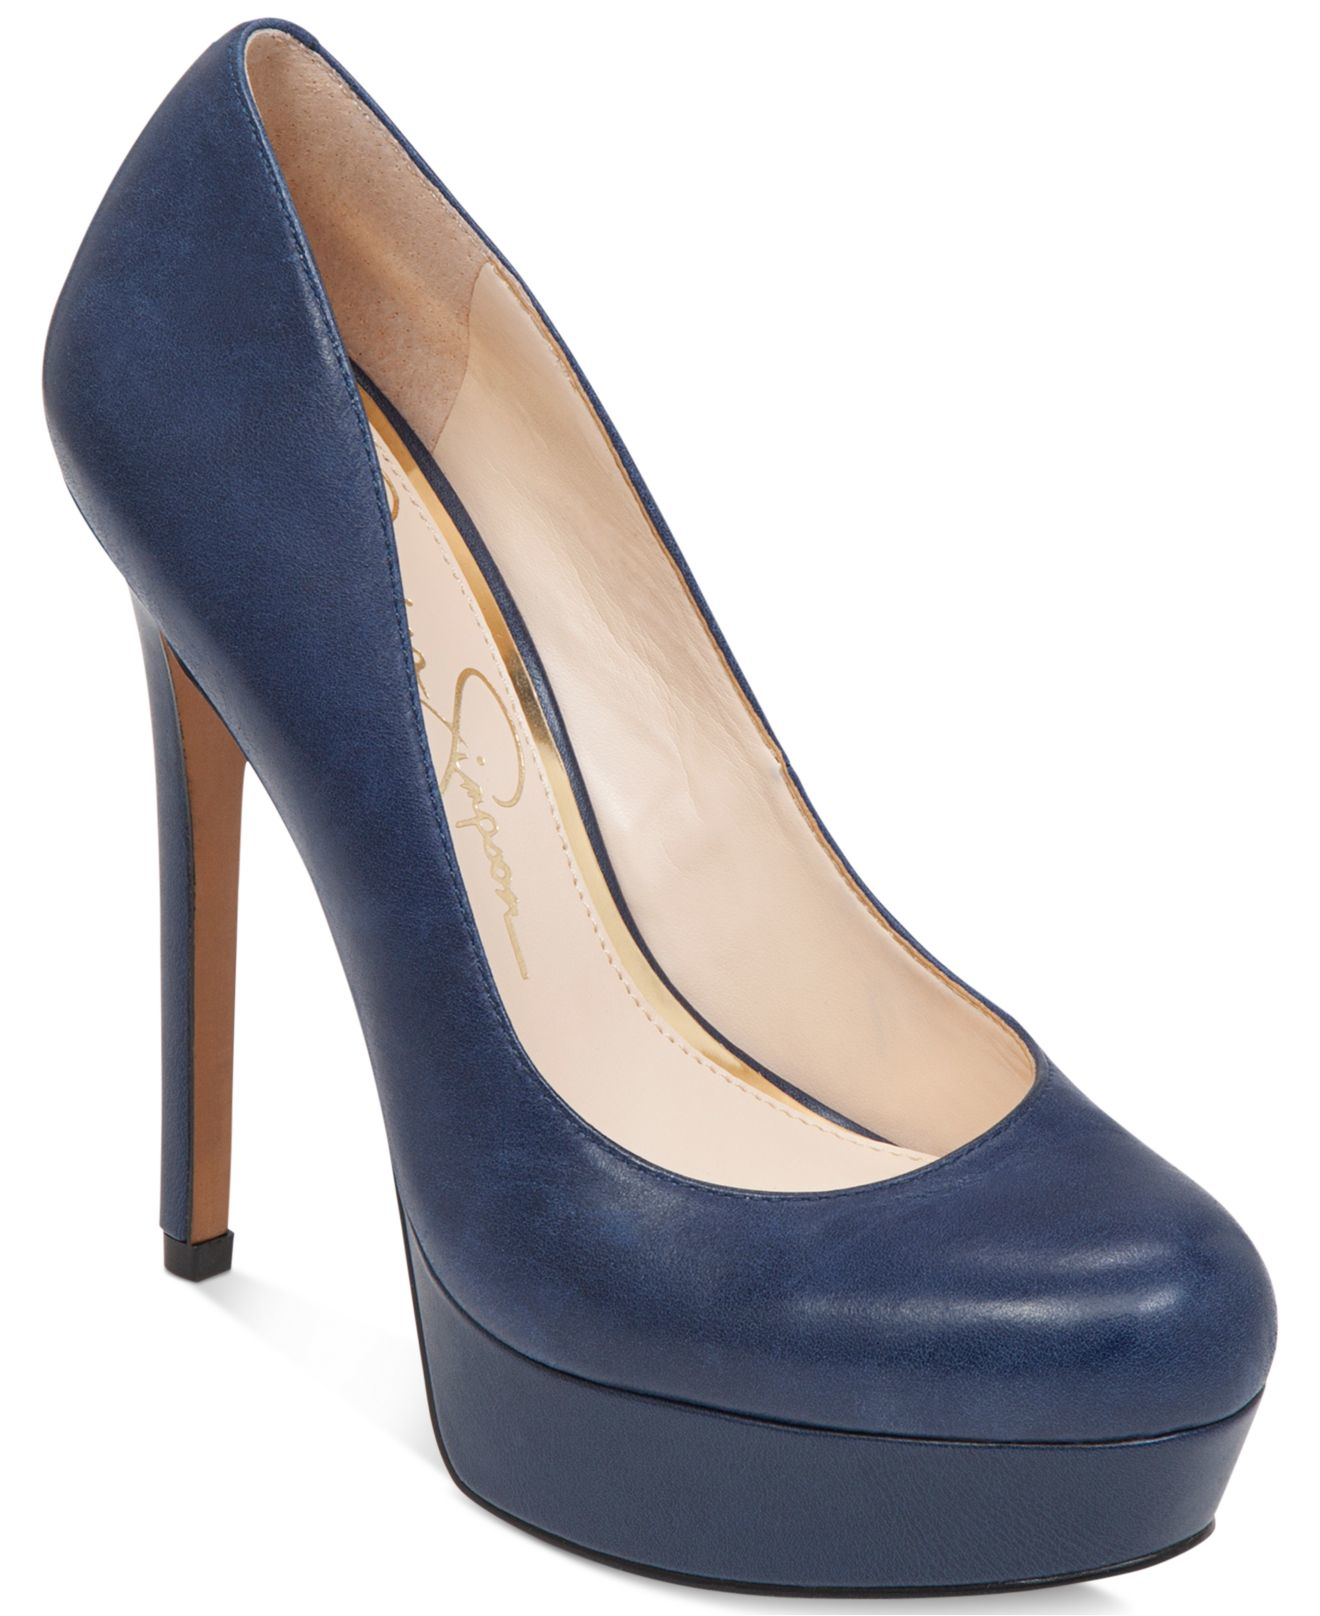 jessica simpson navy blue shoes